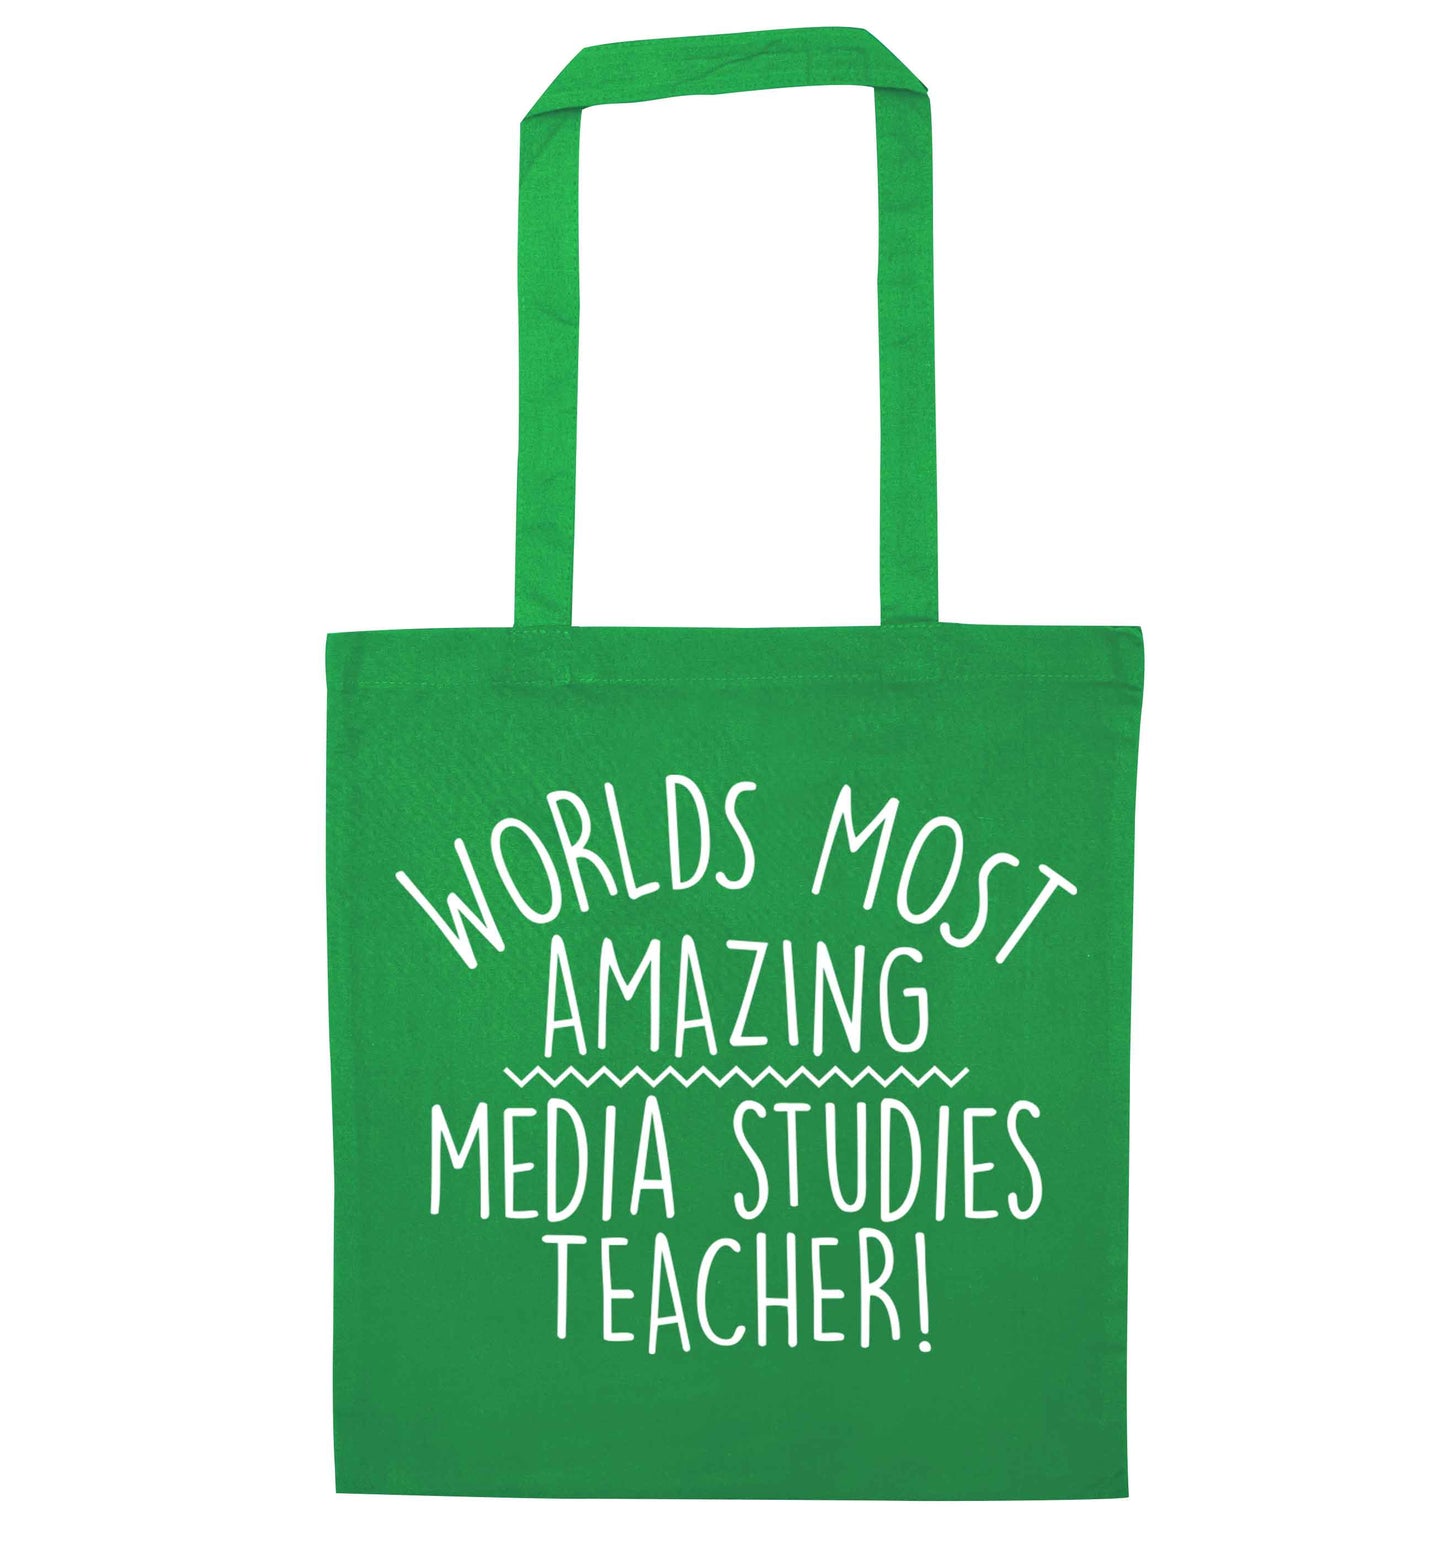 Worlds most amazing media studies teacher green tote bag